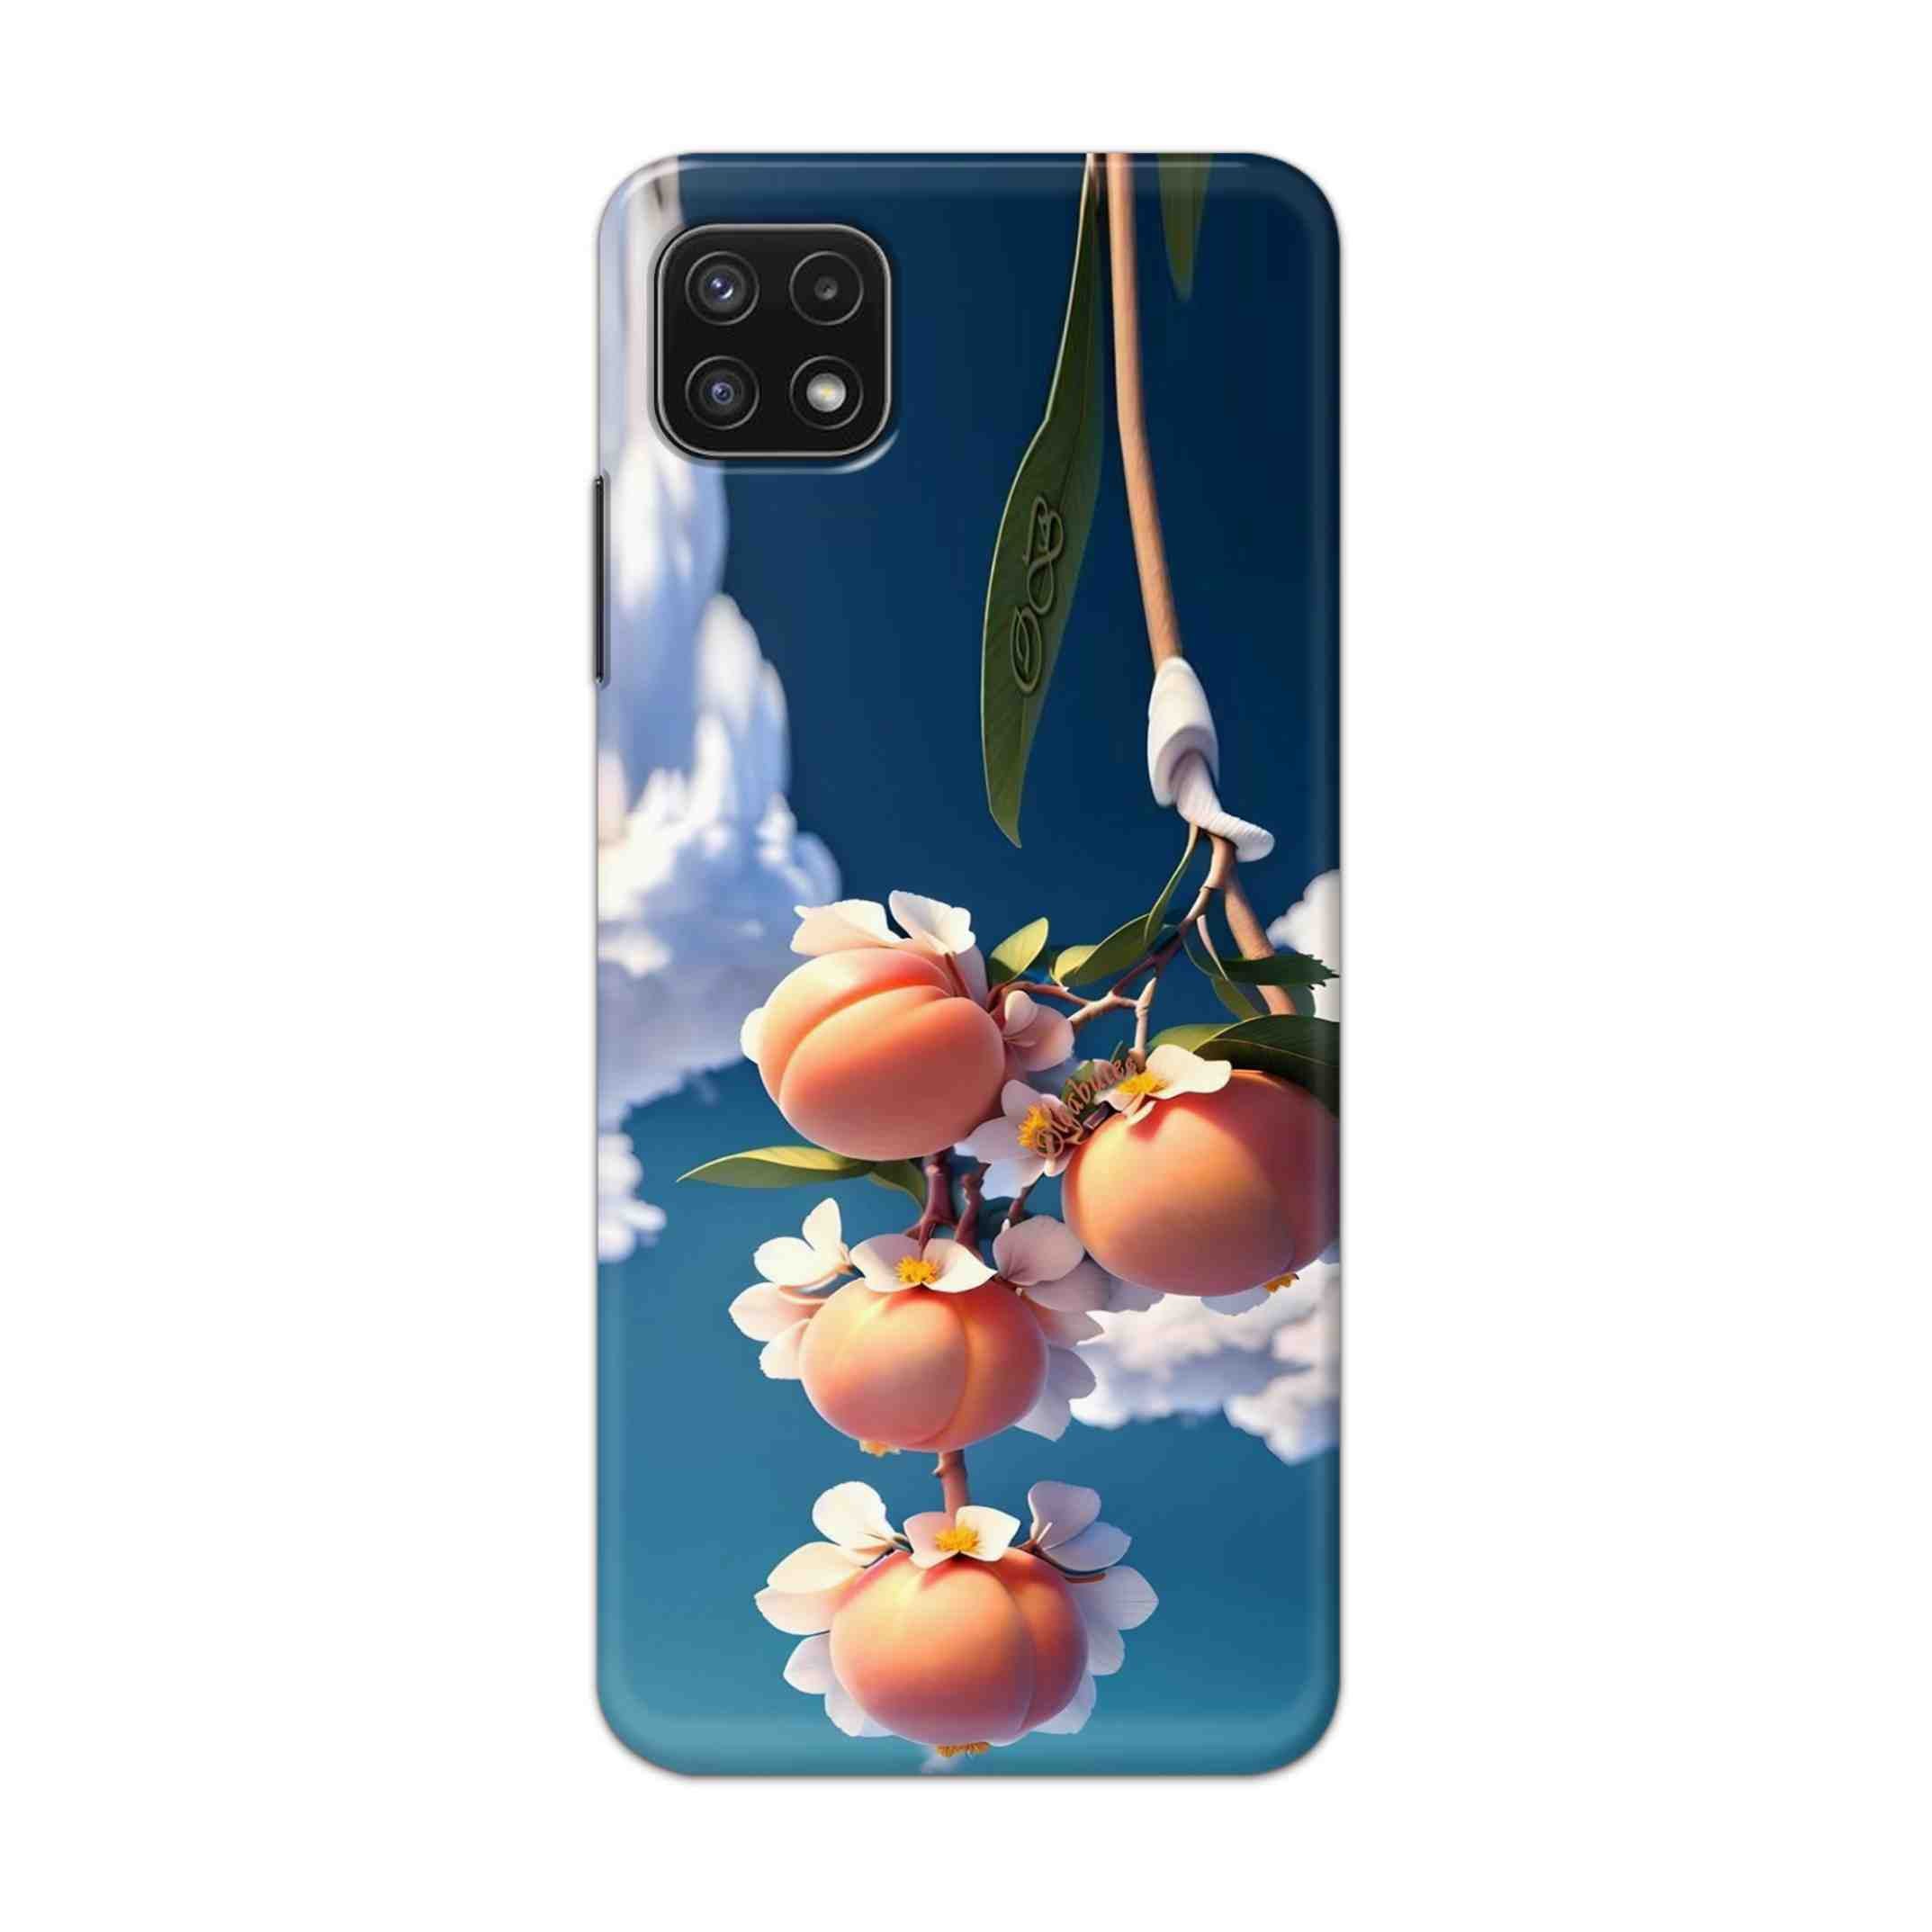 Buy Fruit Hard Back Mobile Phone Case Cover For Samsung A22 5G Online